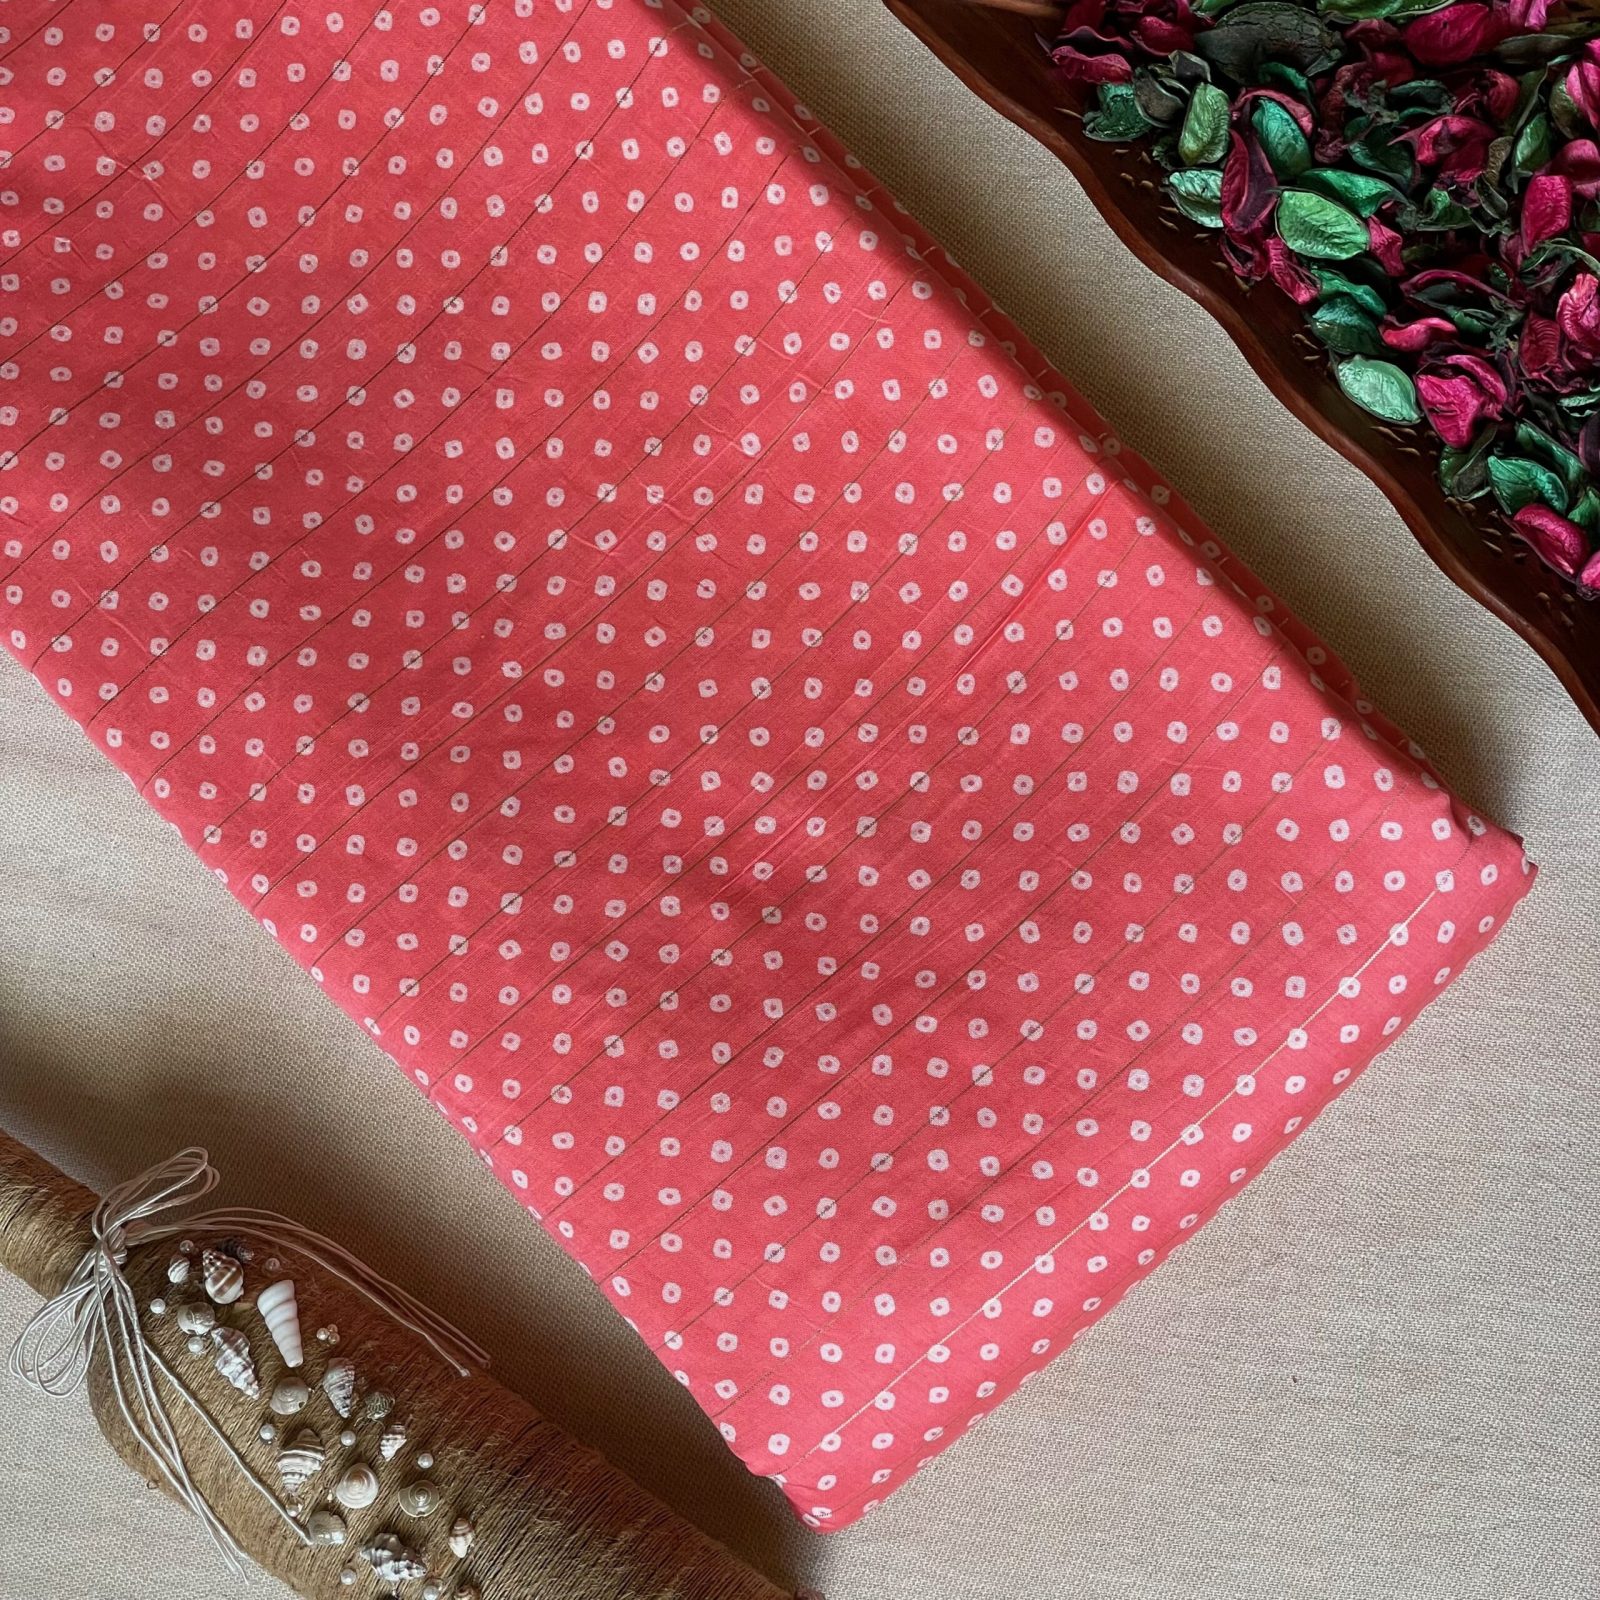 Pure Muslin Printed Fabric with Lurex Line - Pink/White - Dots - Bandhej/Bandhani